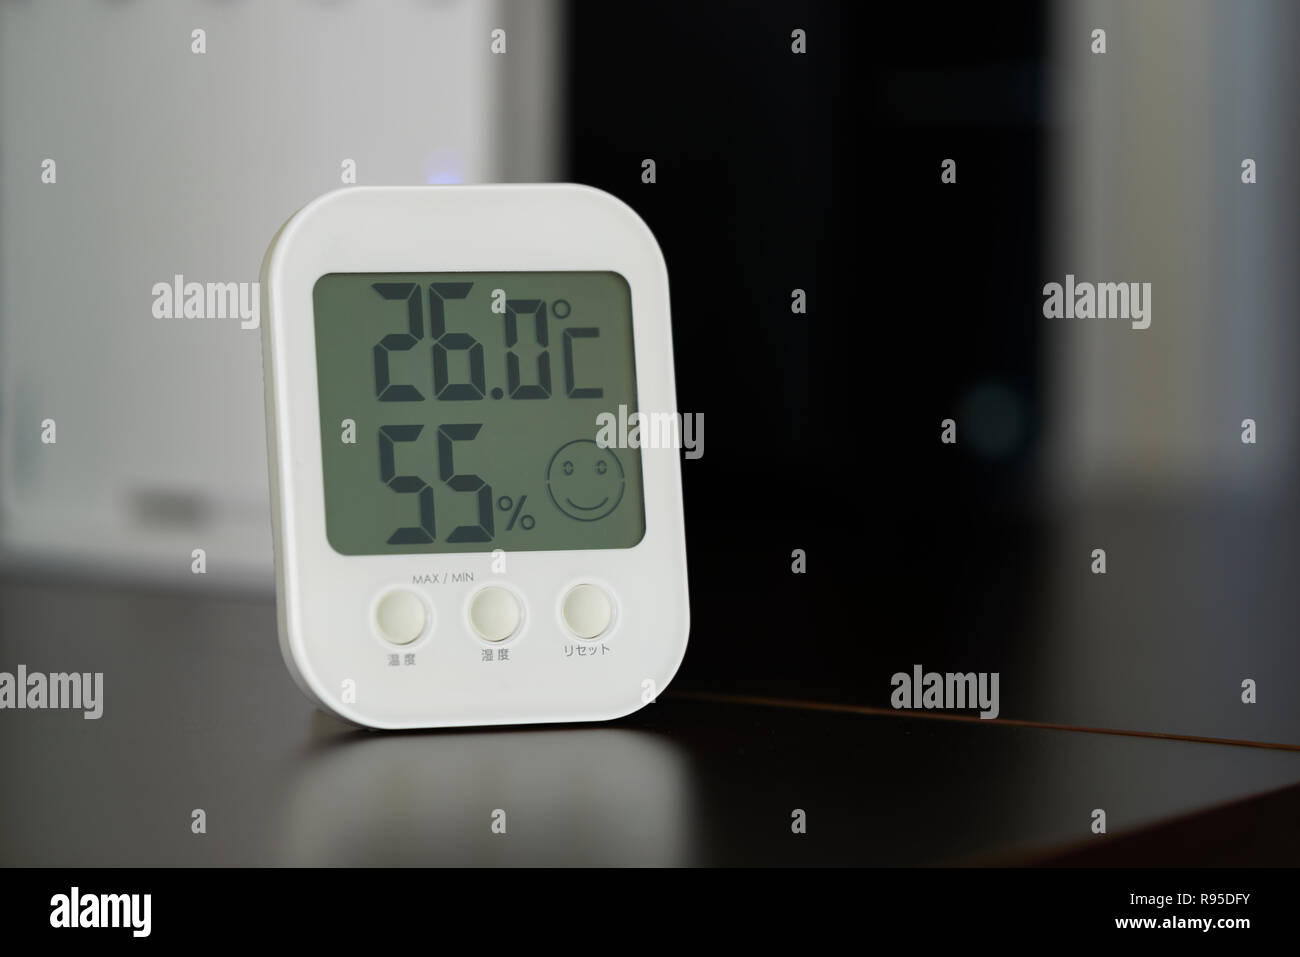 CX-220 Digital Thermometer Hygrometer Temperature Humidity Sensor